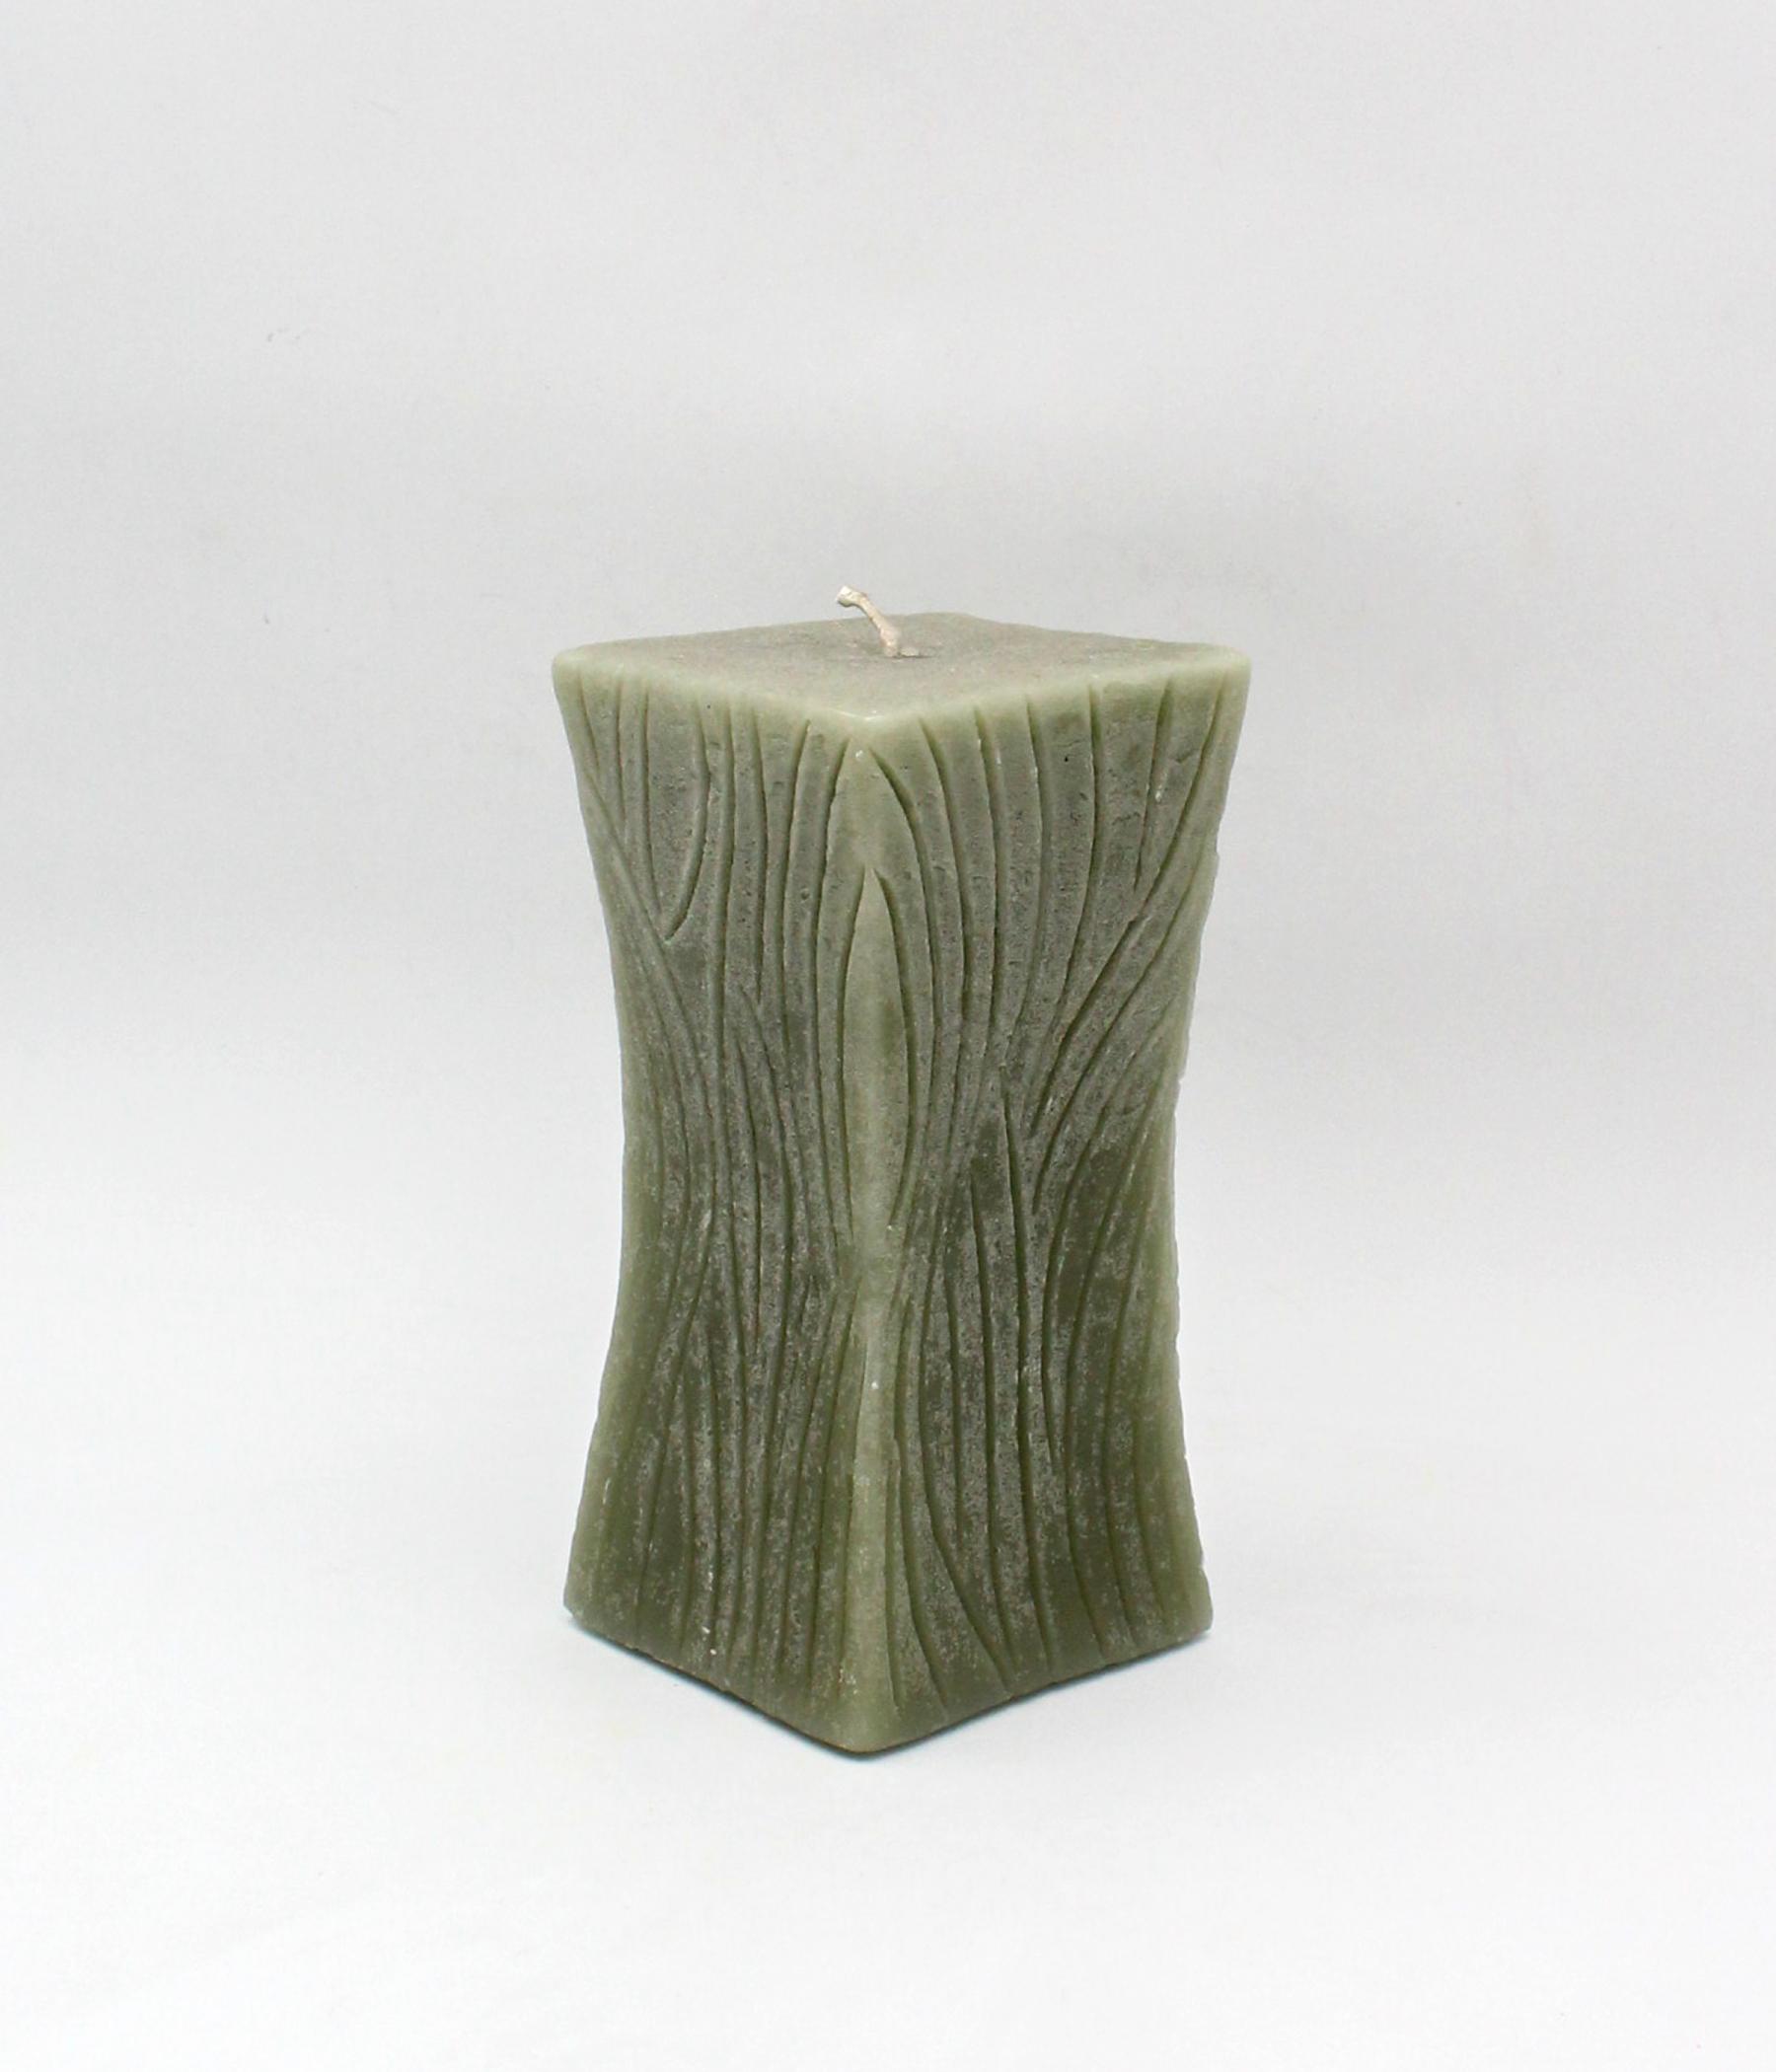 Wood candela volume